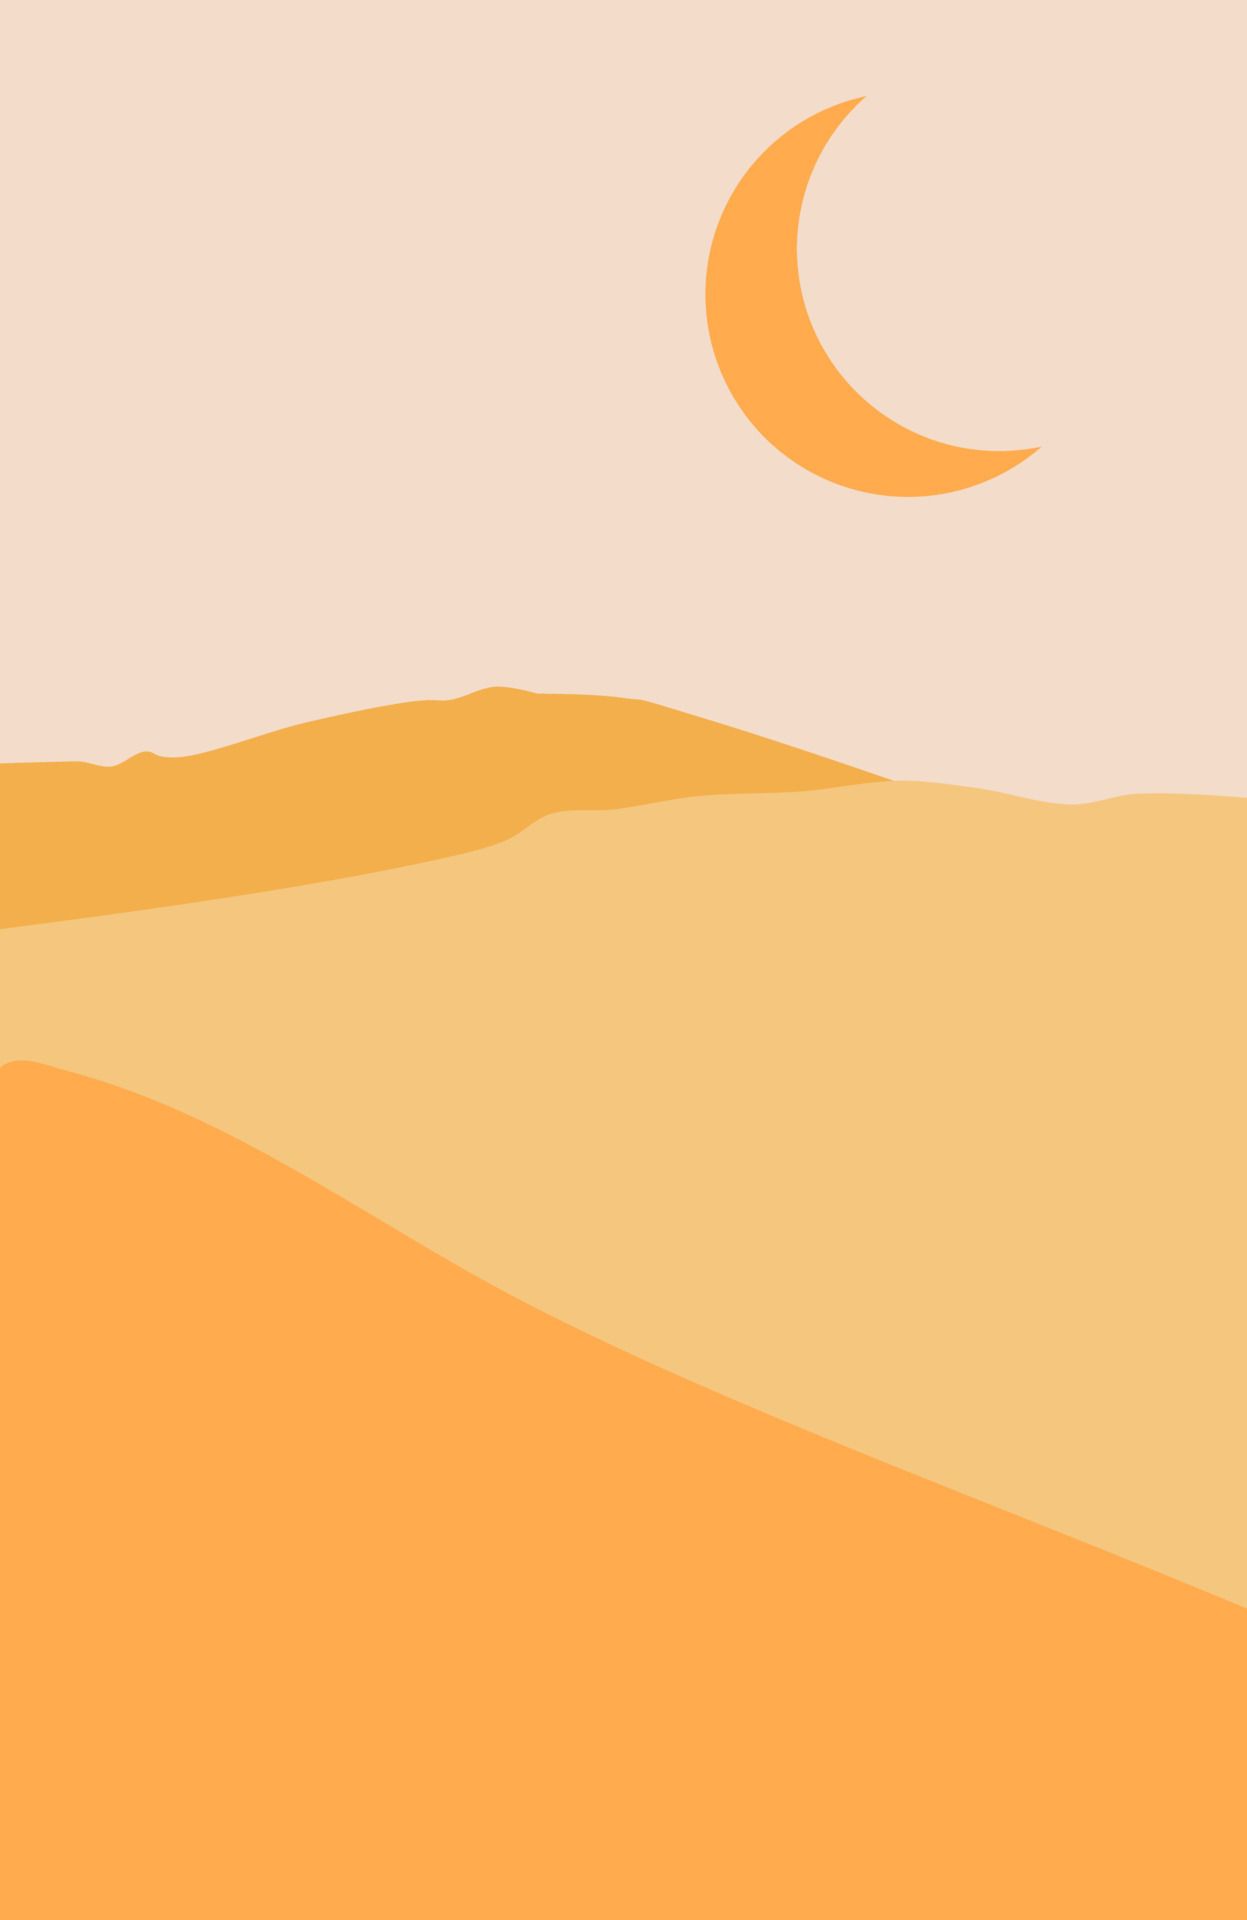 A moon in the sky over an orange desert - Minimalist